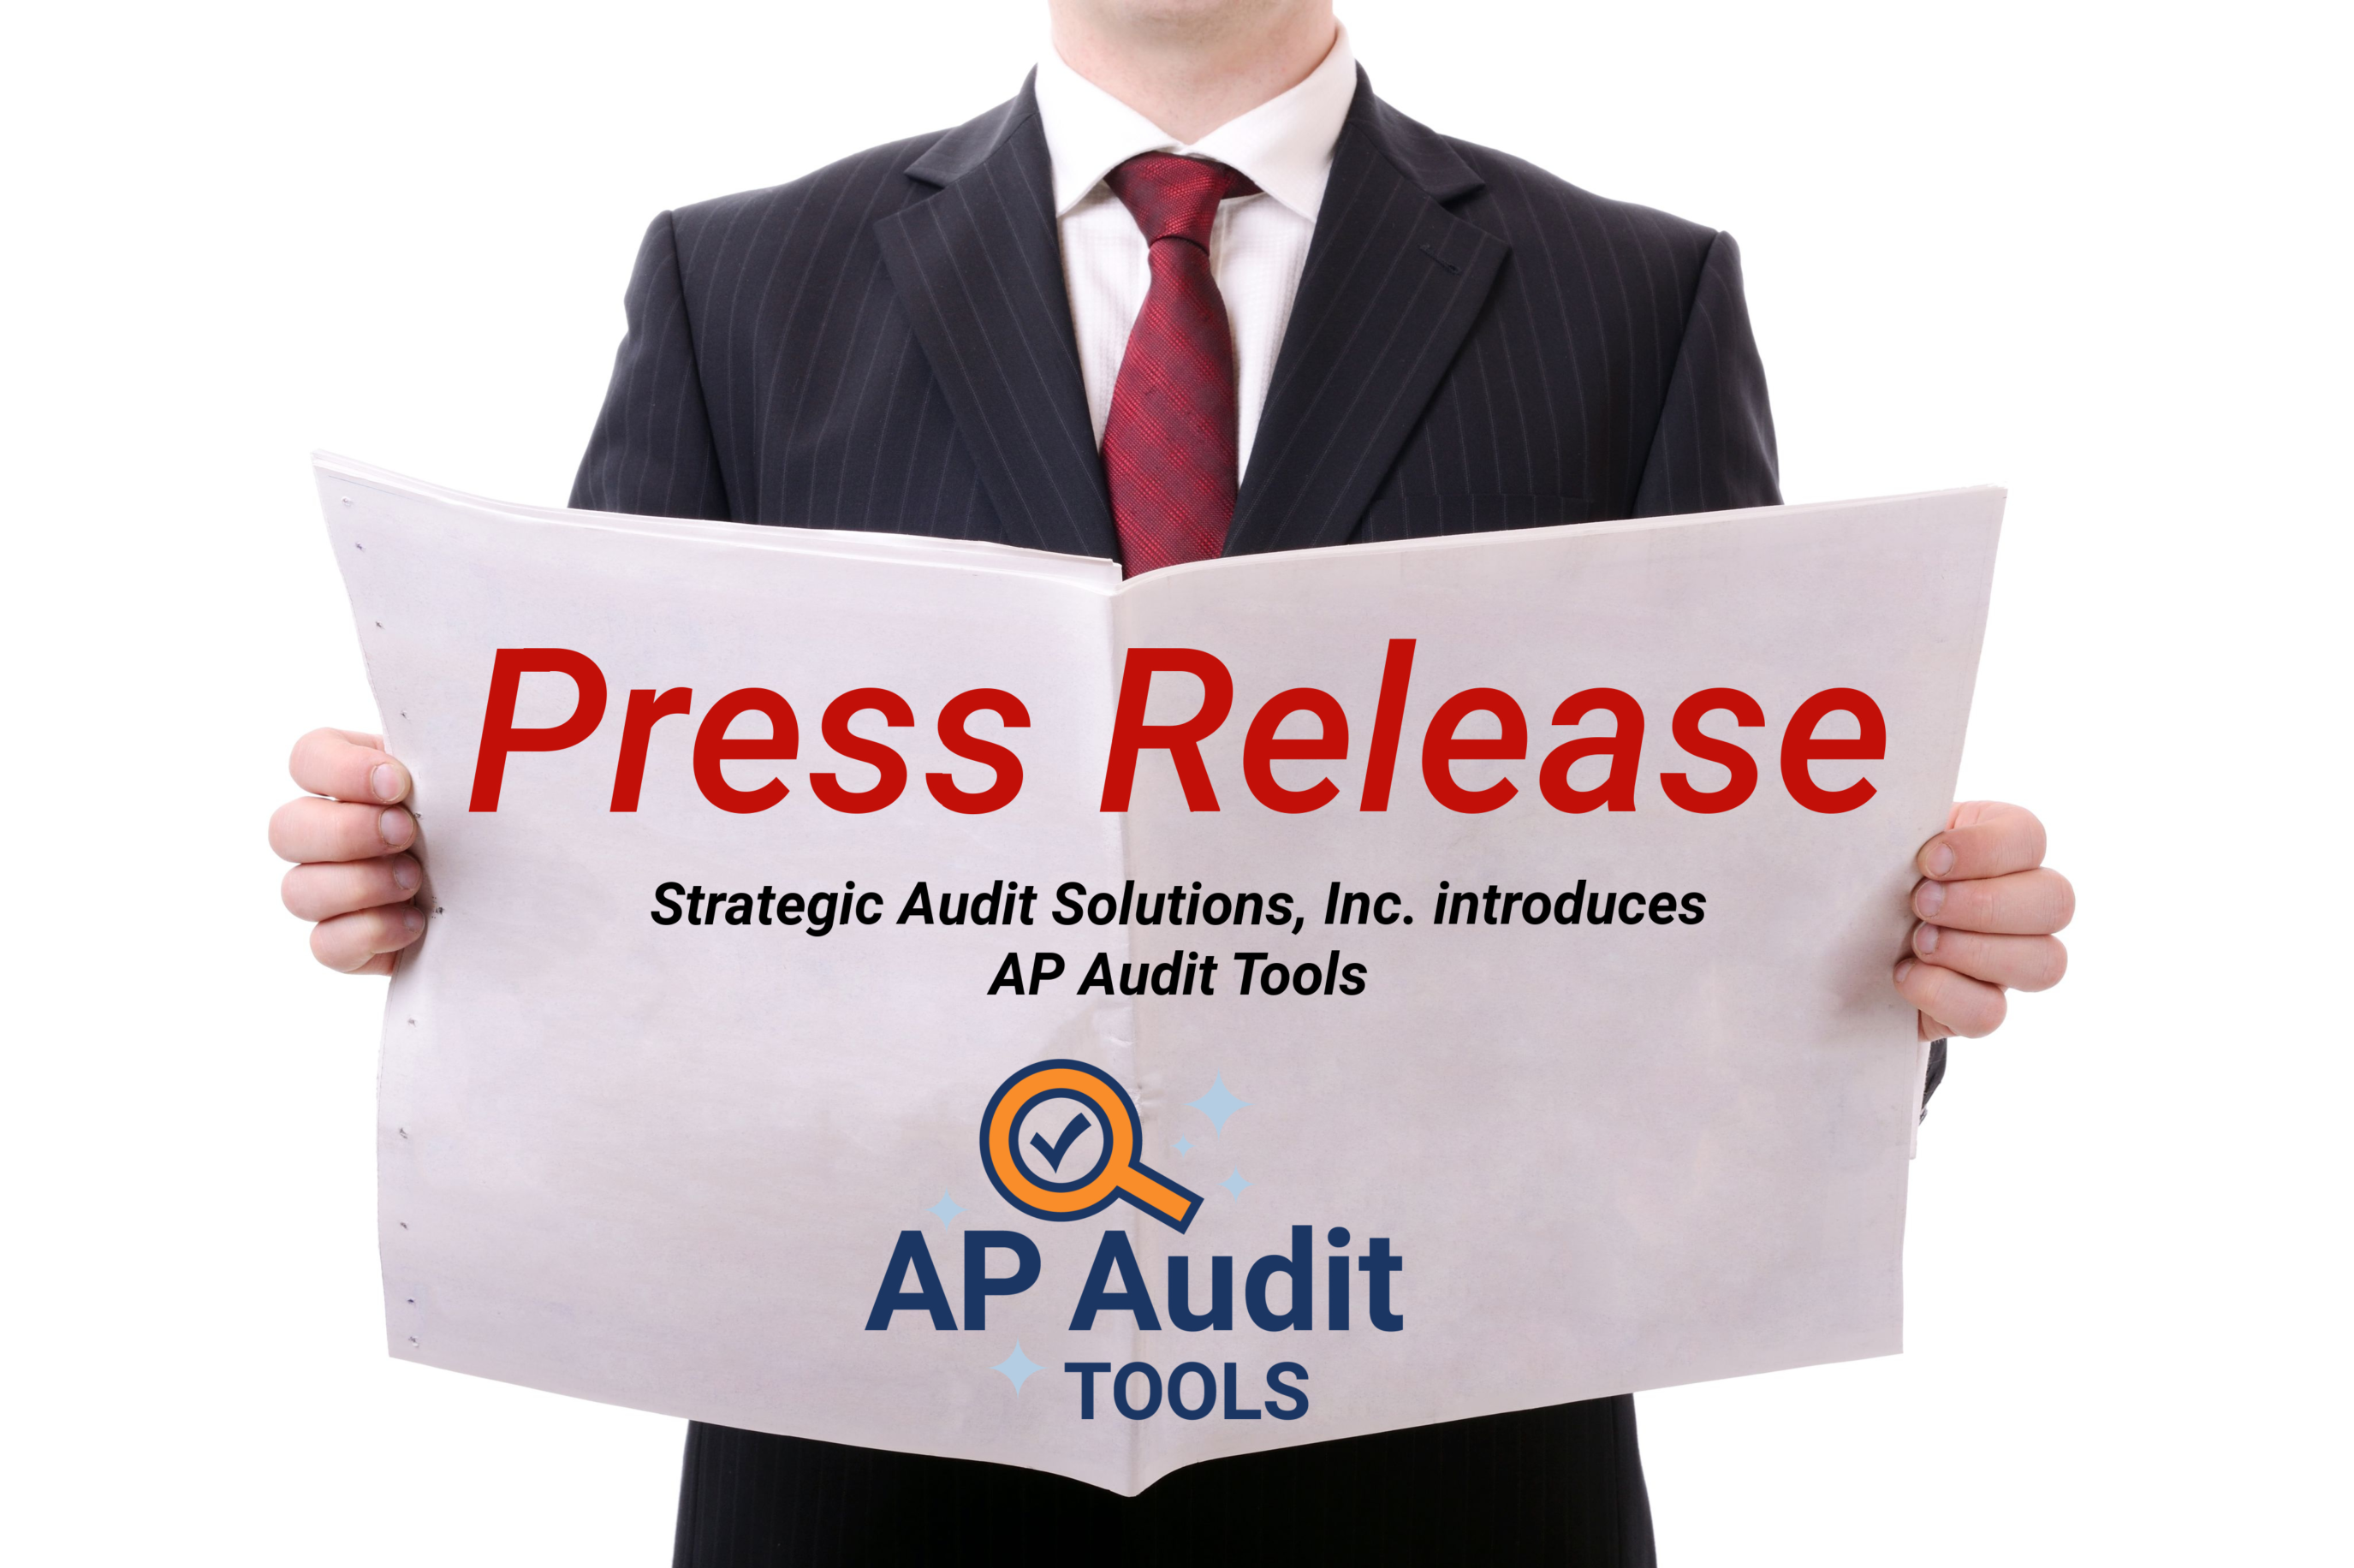 Man reading AP Audit tools press release